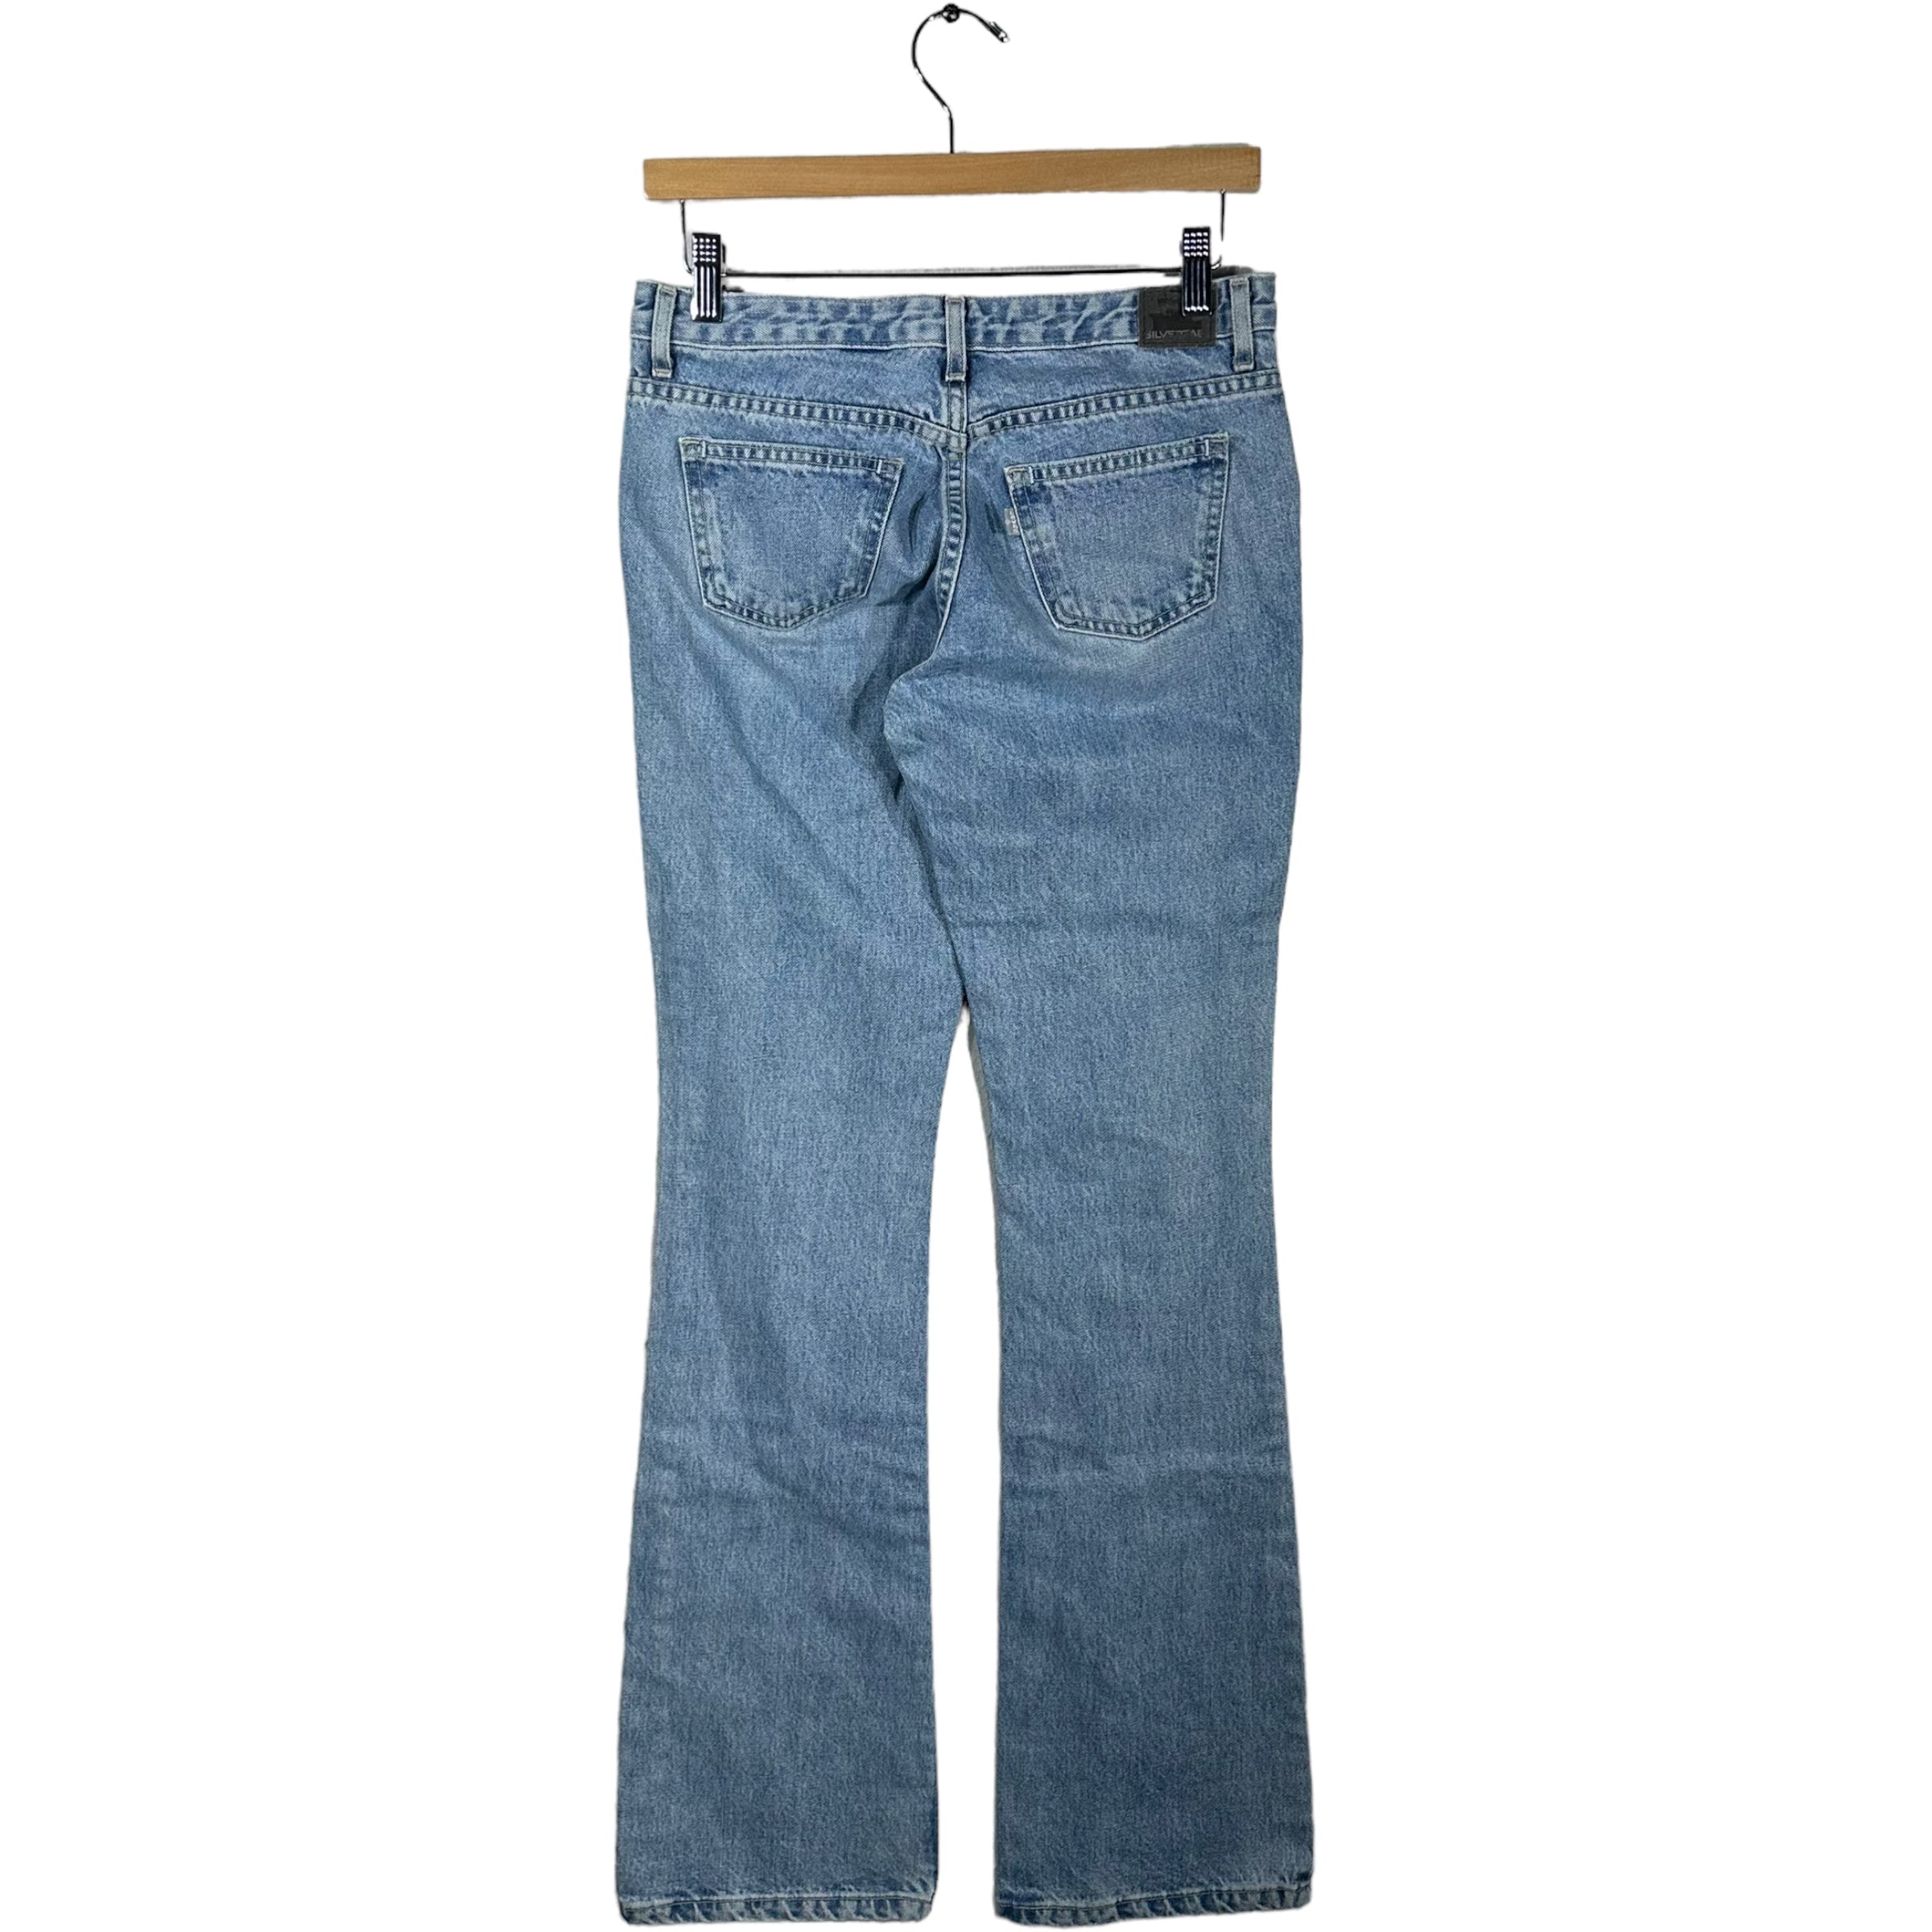 Vintage Levi's Silver Tab Jeans